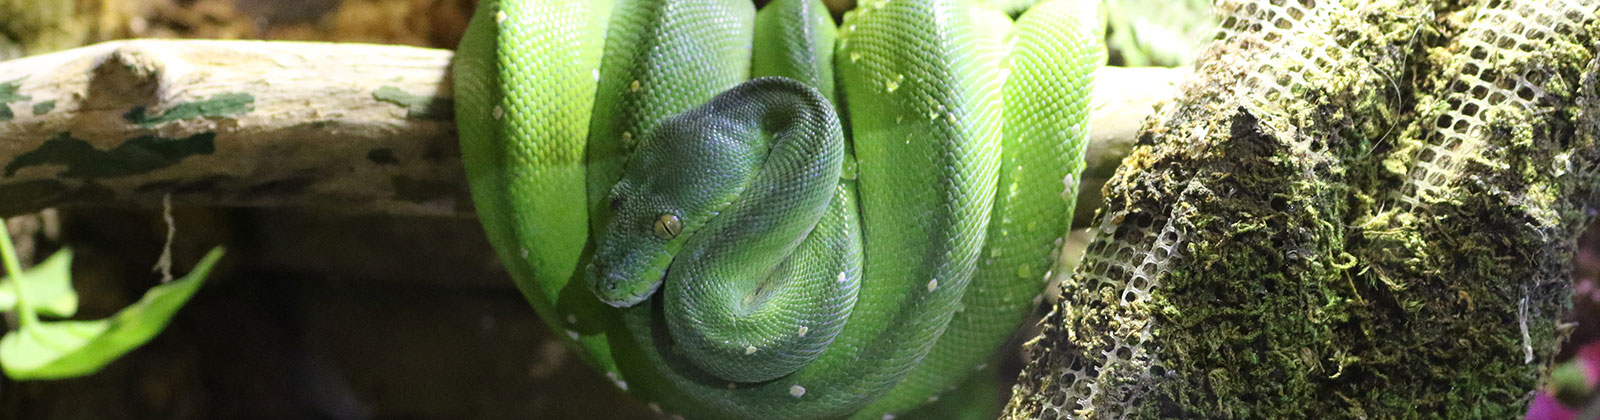 Green Tree Python at Greater Cleveland Aquarium